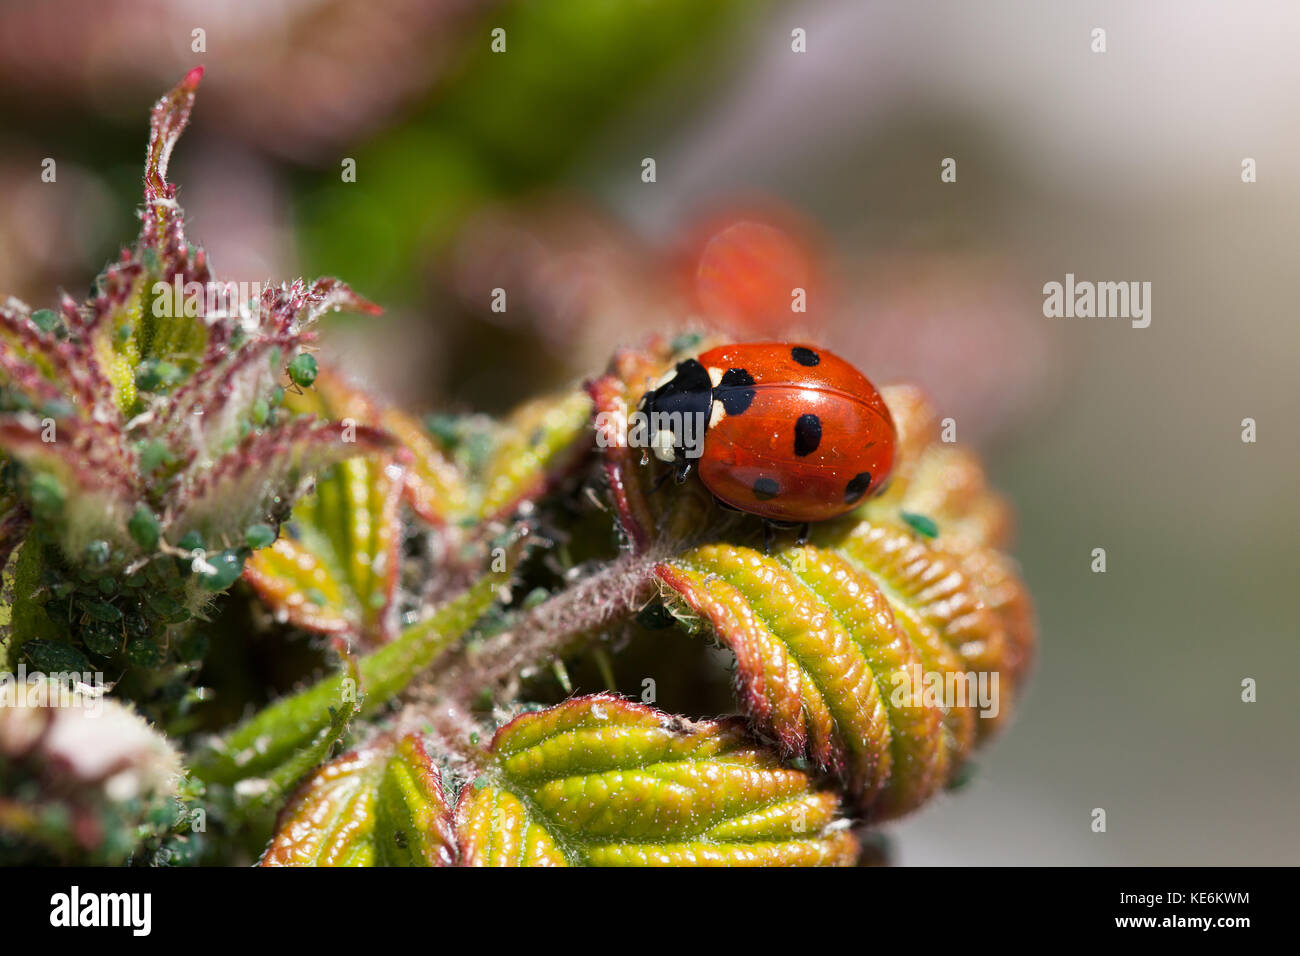 Lady bug eating plant lice Stock Photo